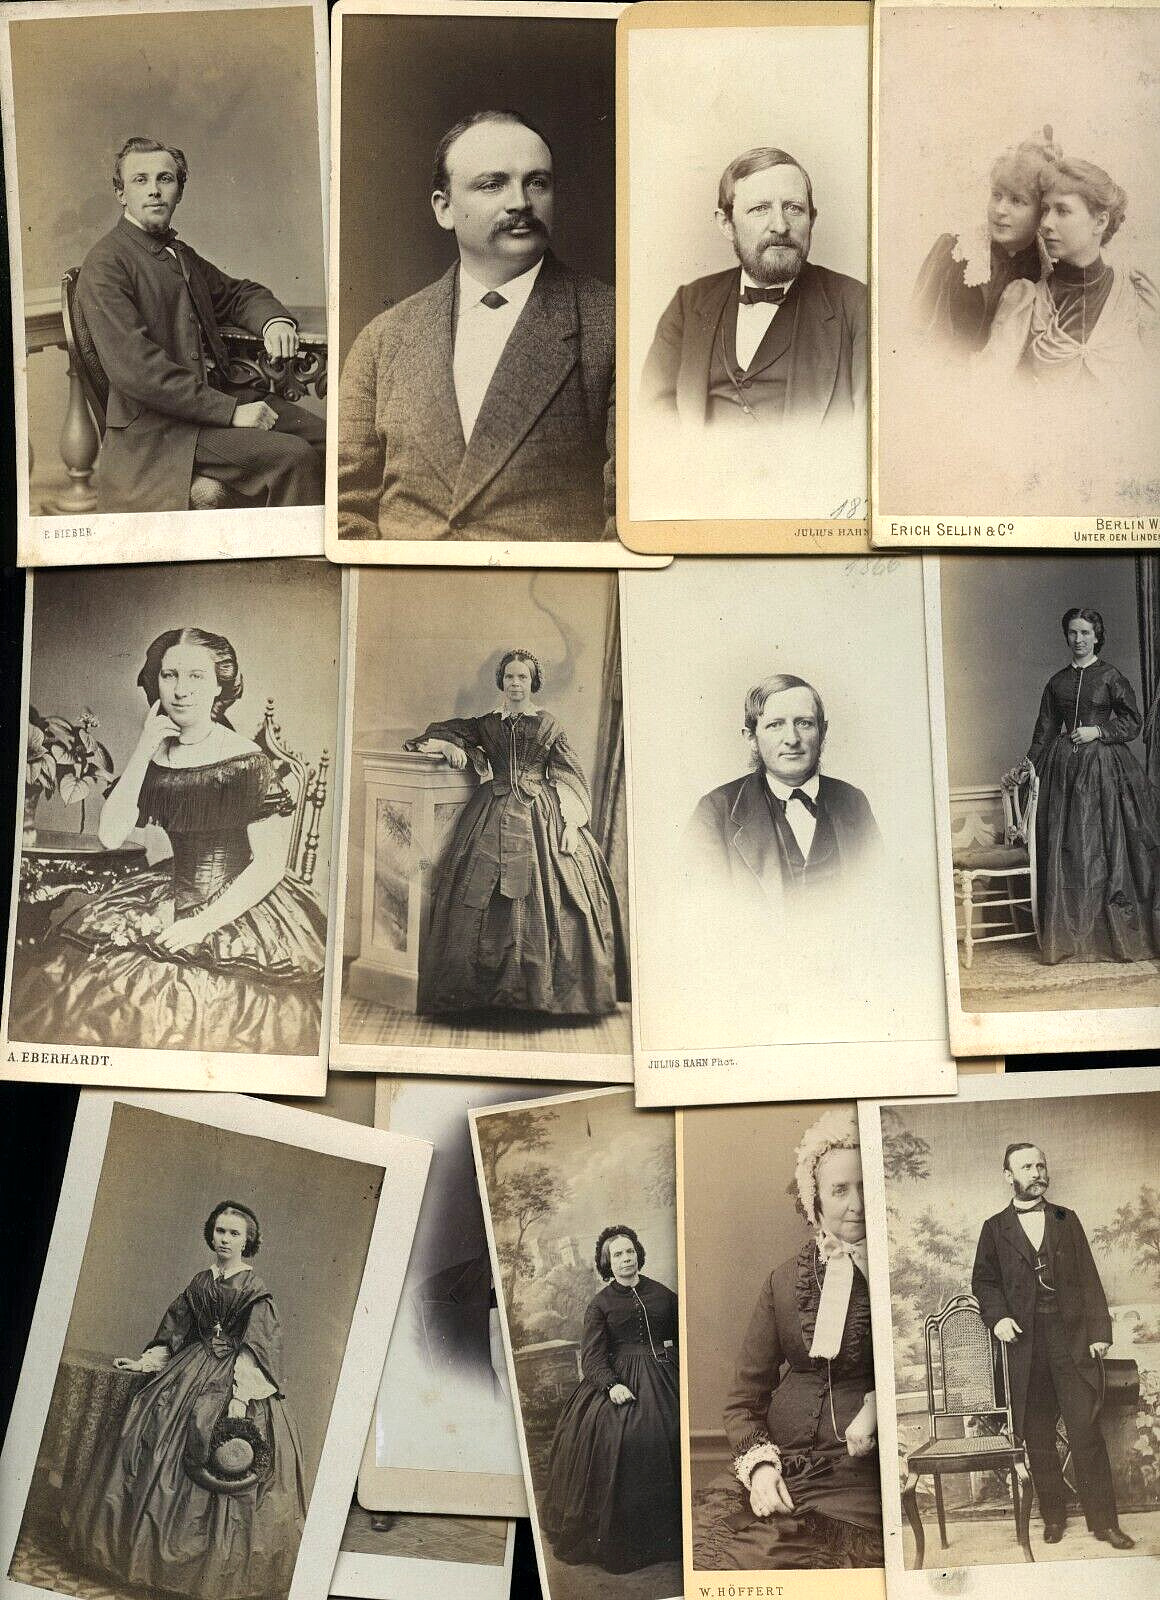 Lot of 15 Antique CDV Photos 1860s 1870s Prussia Hamburg German Empire Photos